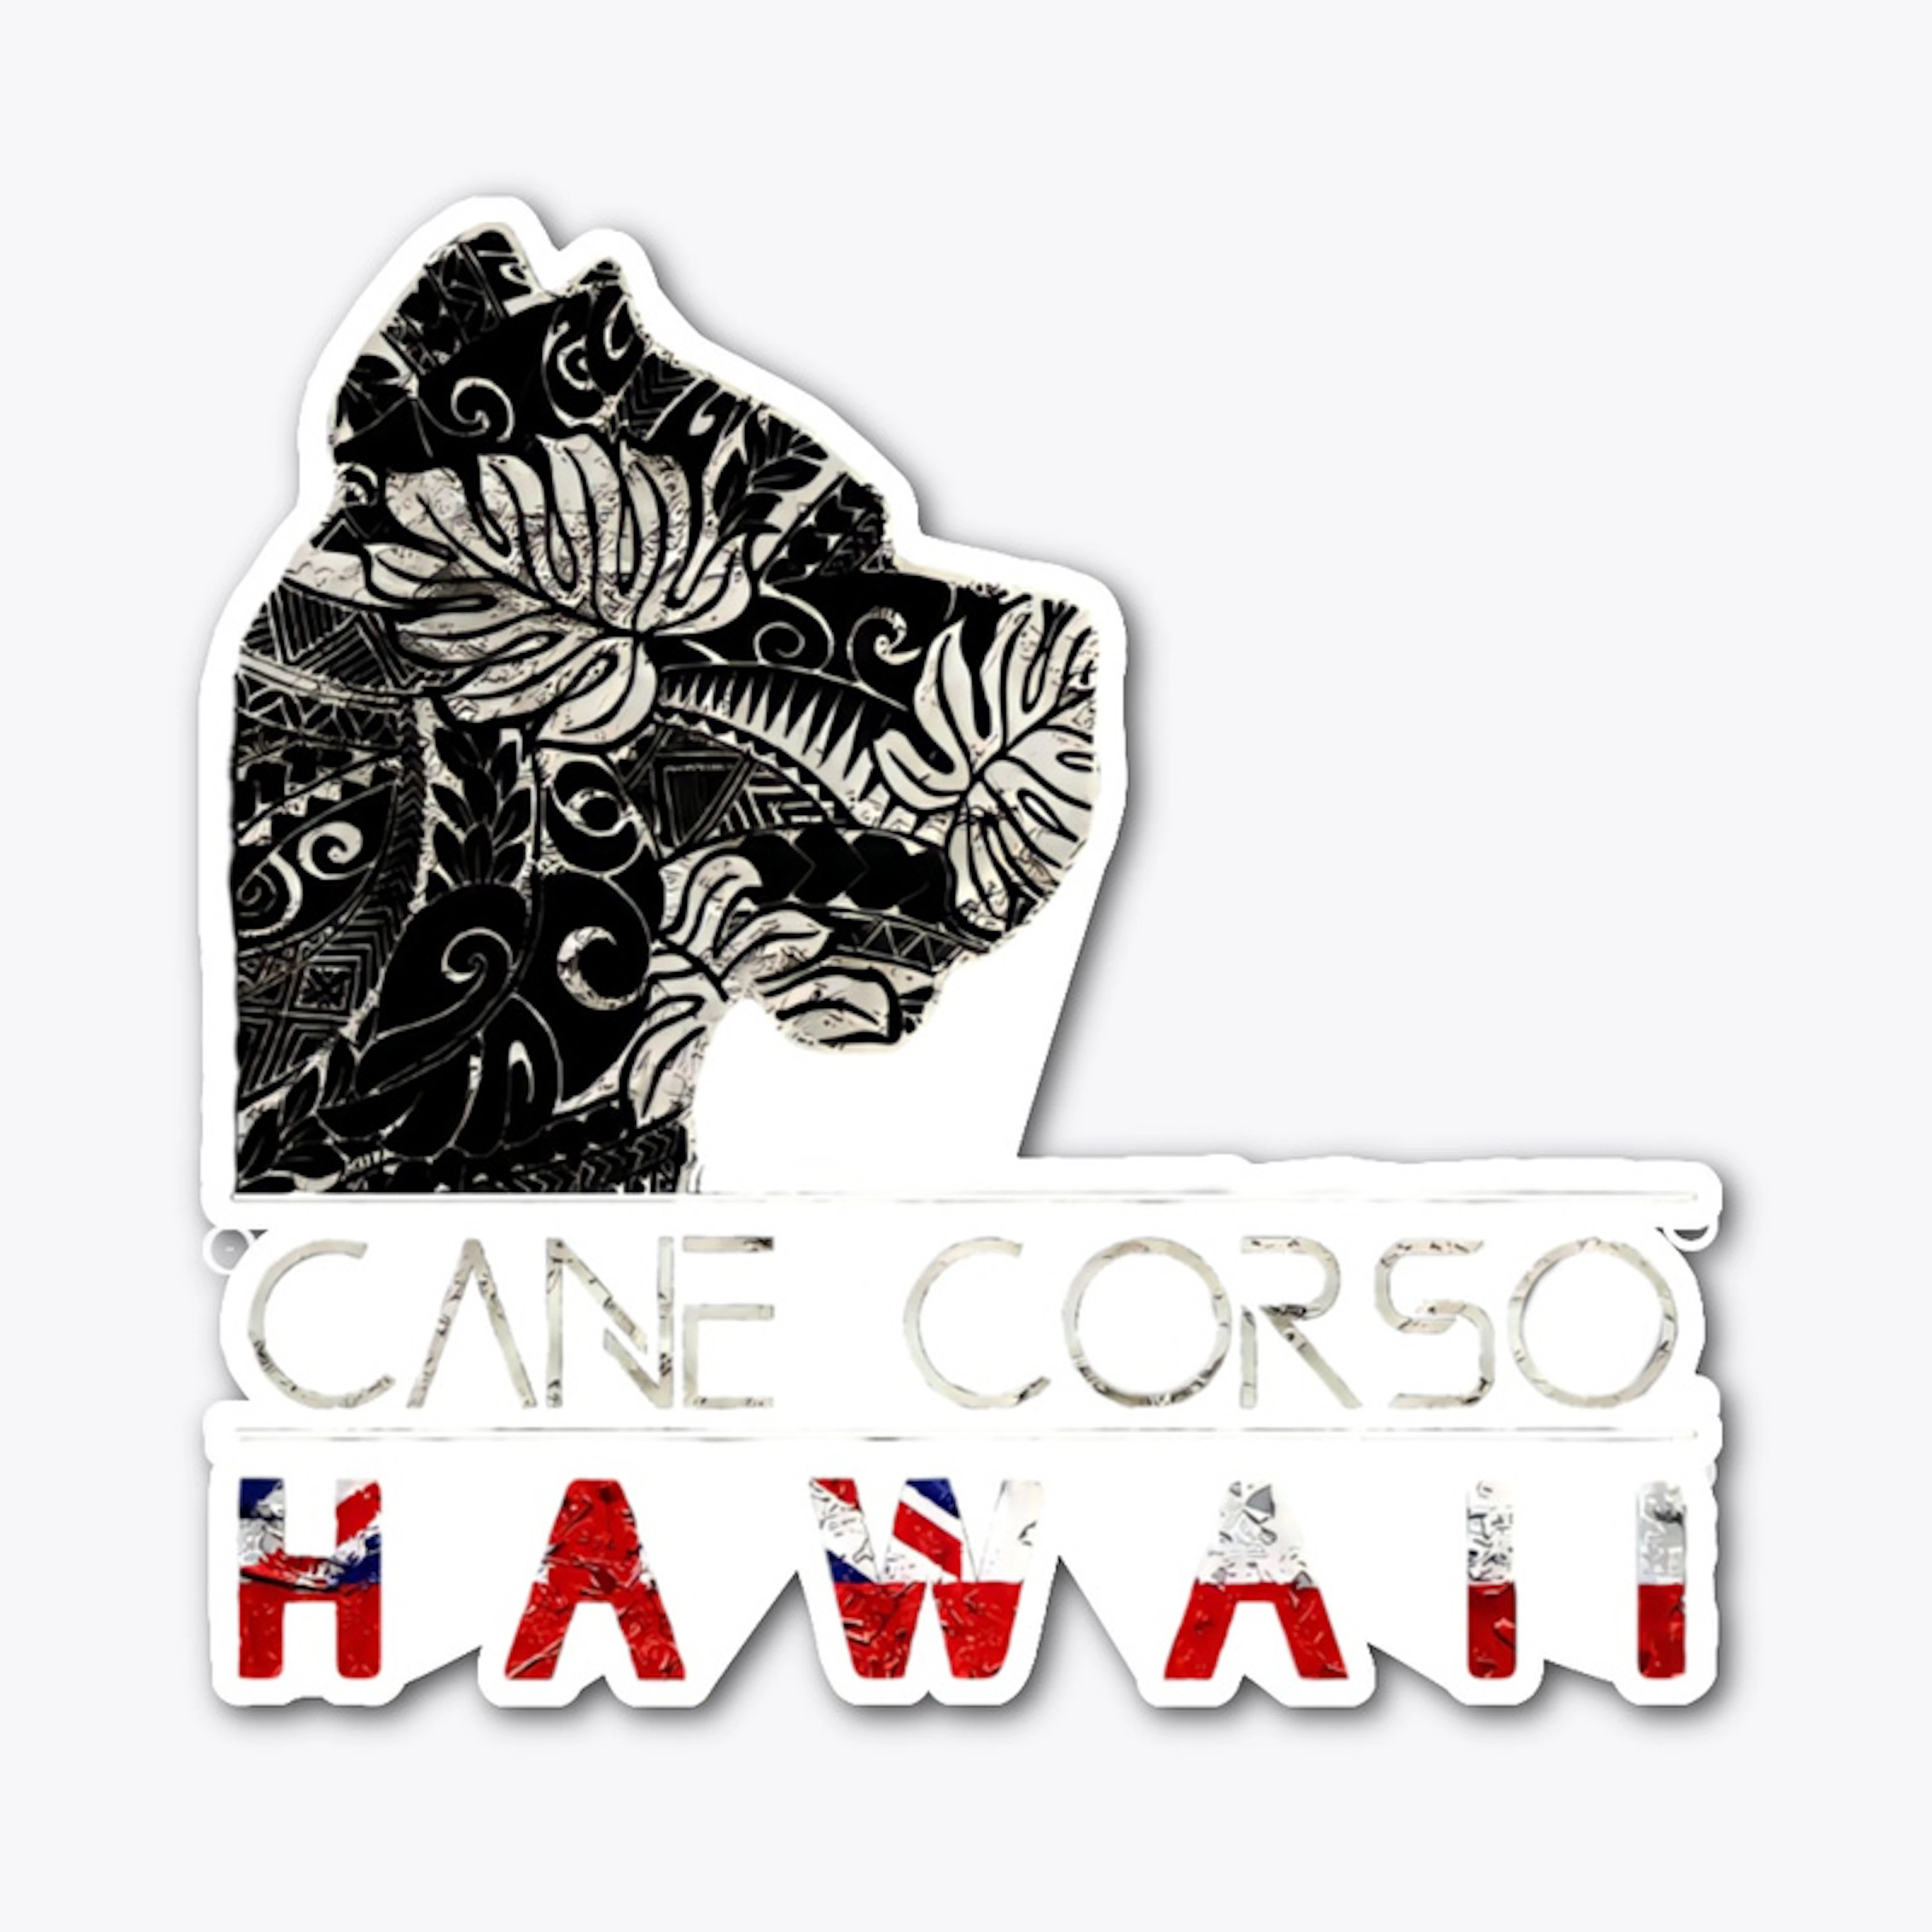 CANE CORSO HAWAII